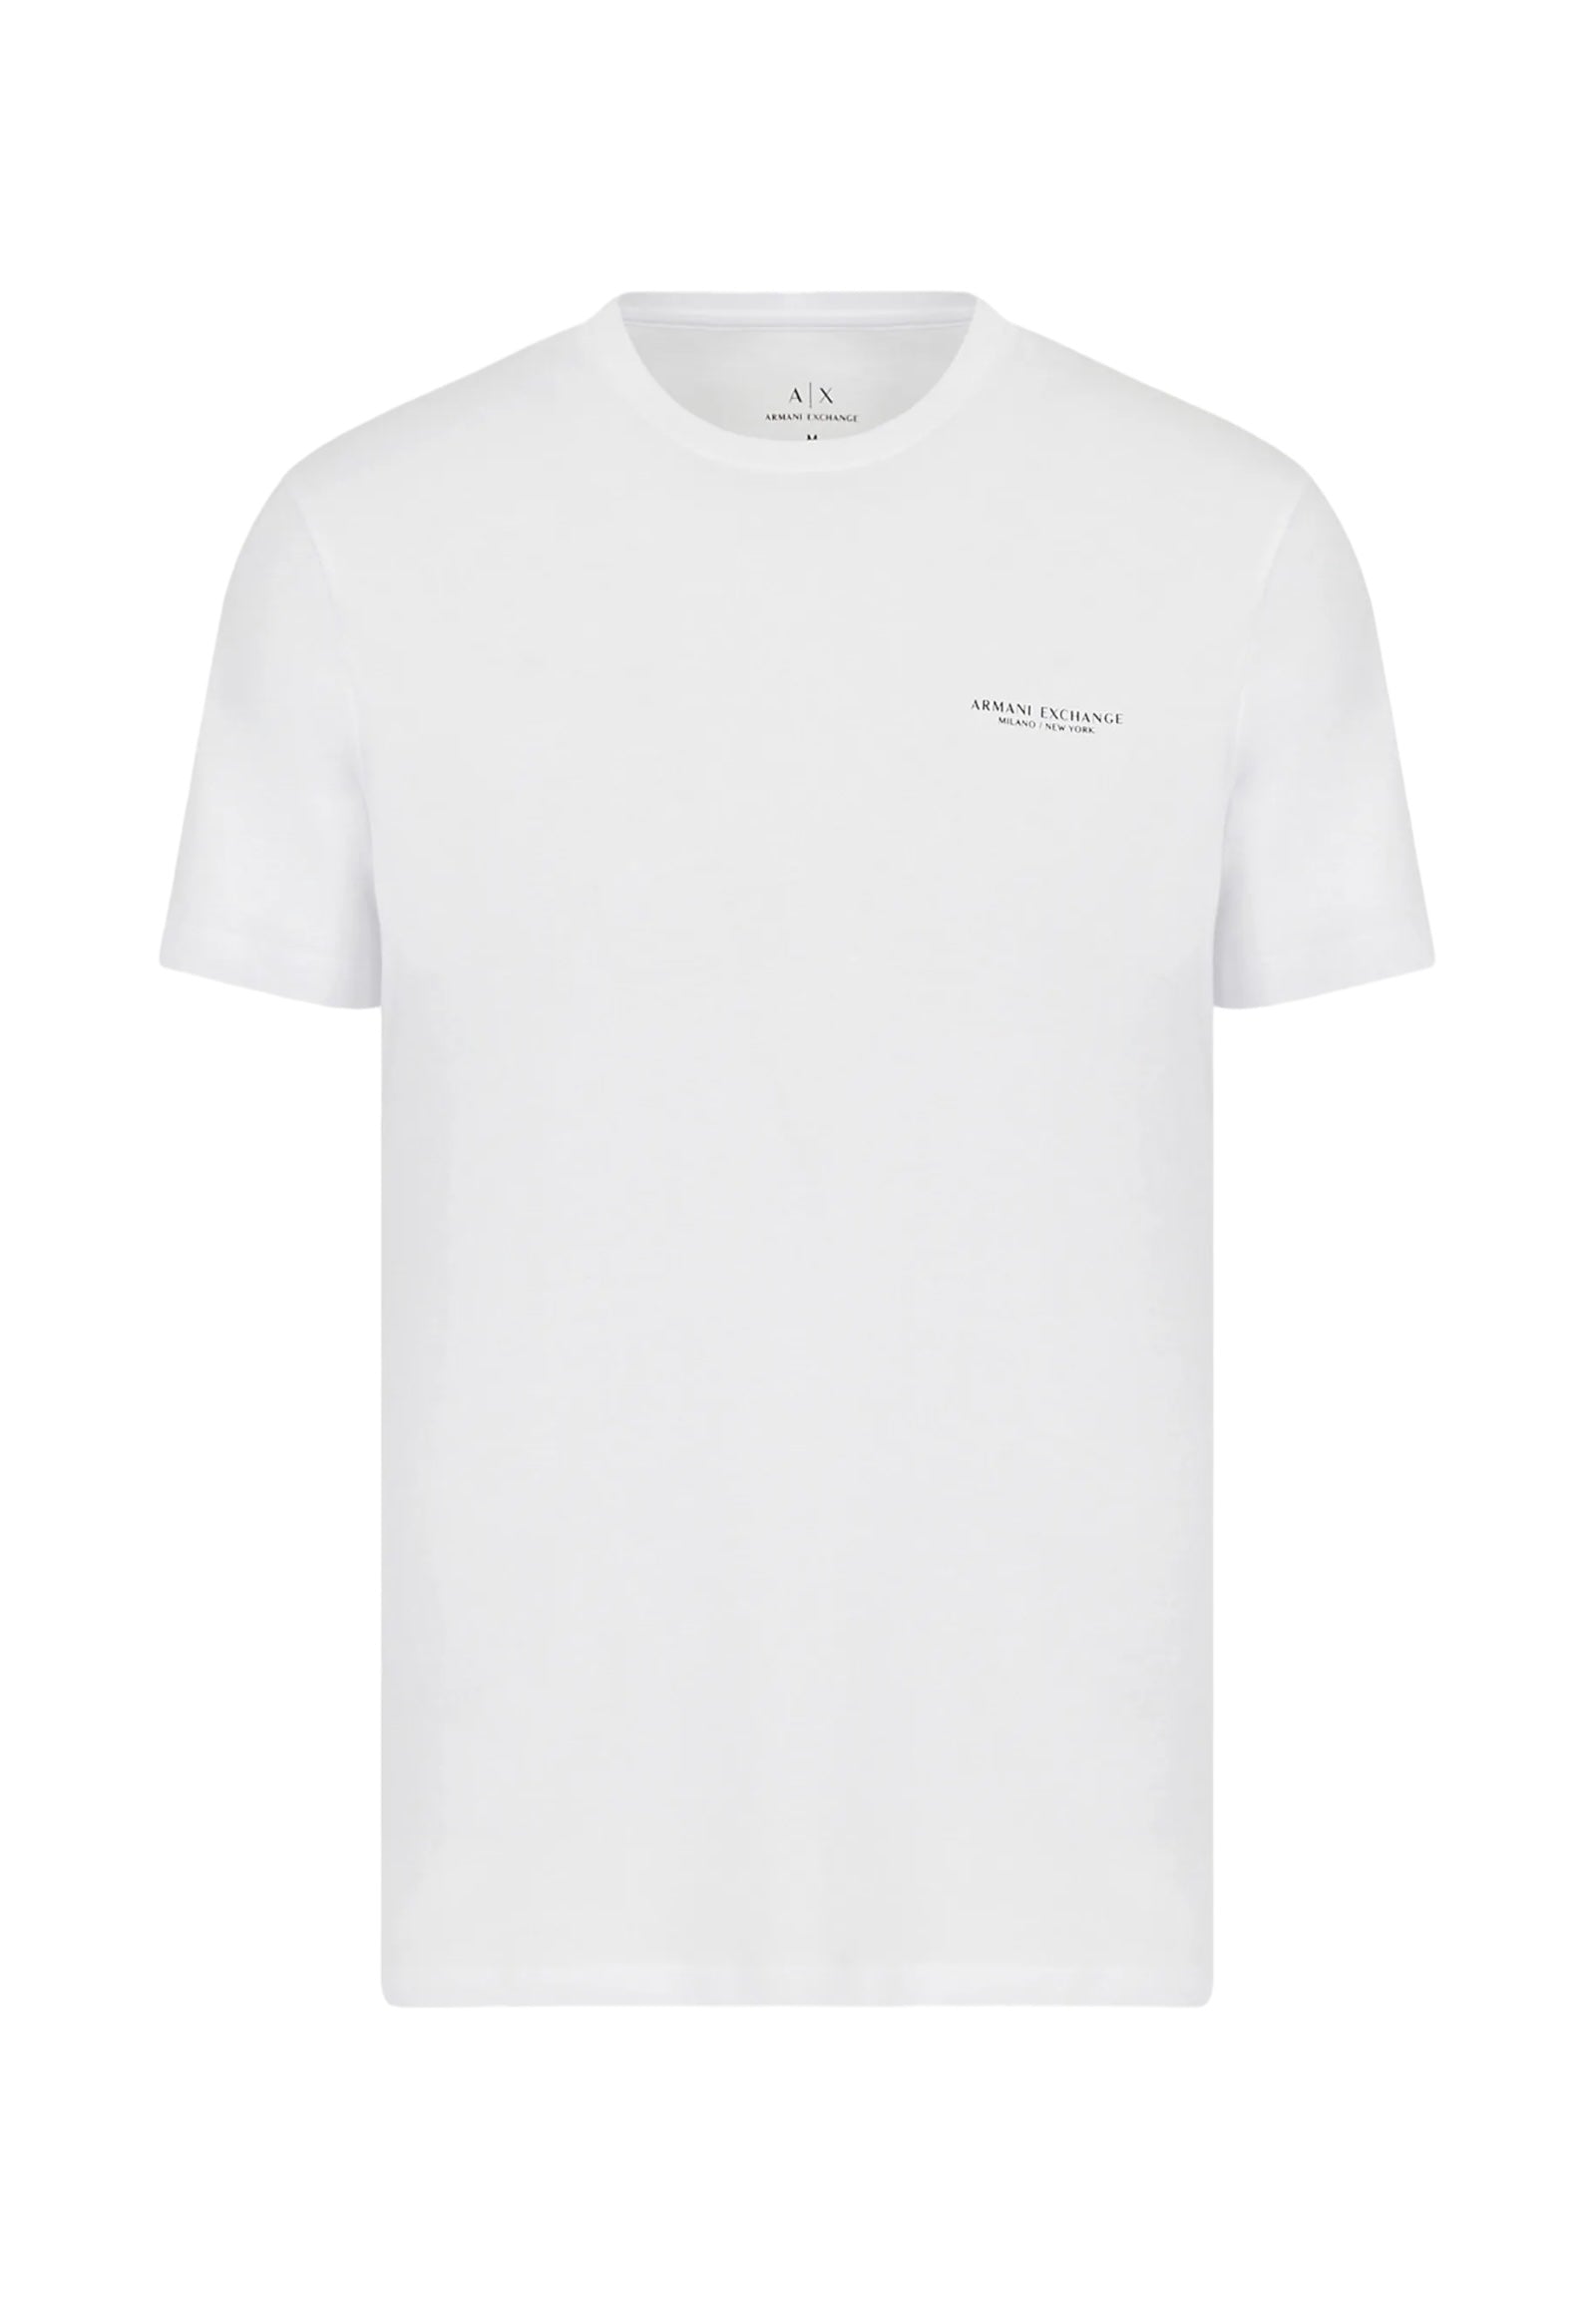 Armani Exchange T-Shirt* 8nzt91 White